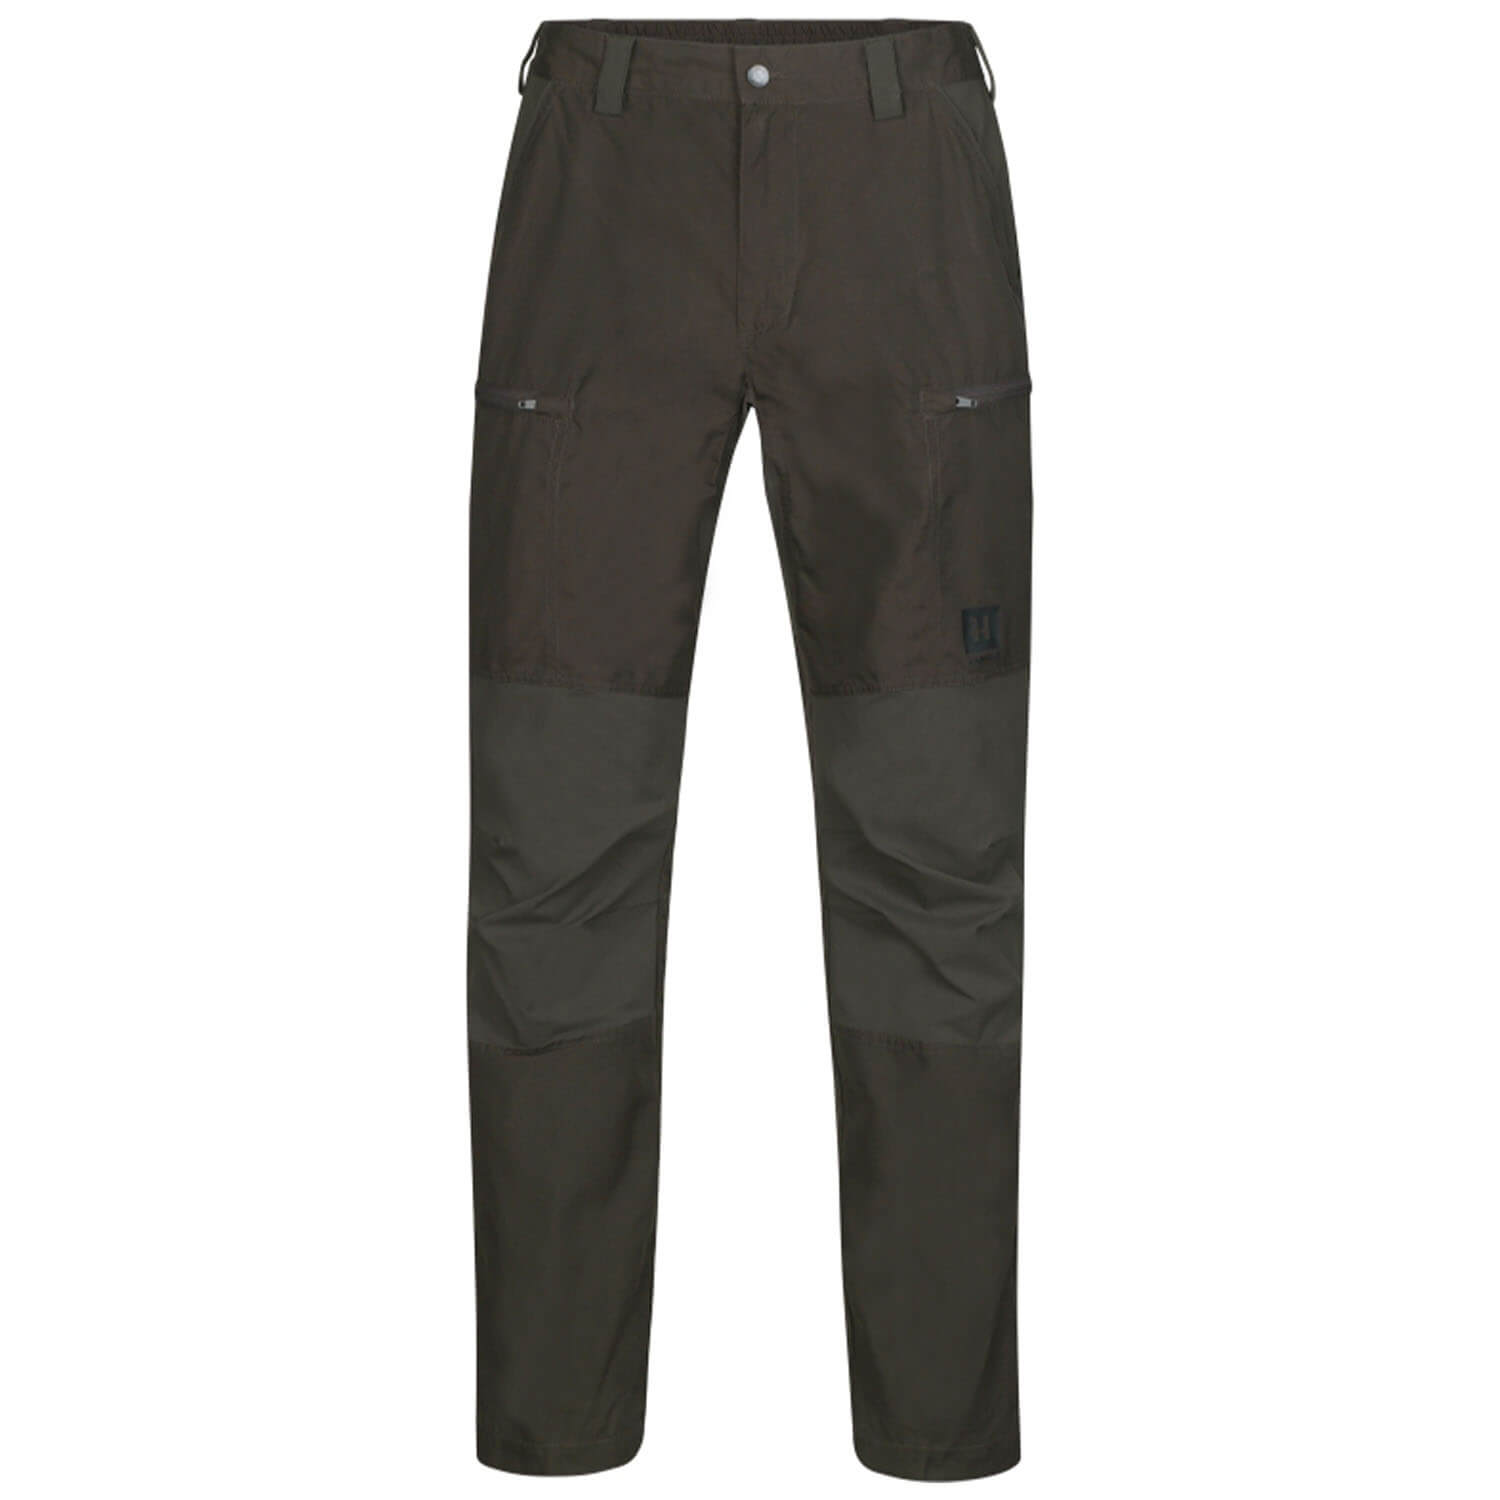 Härkila fjell Trousers (shadwo brown/shadwo grey) - Hunting Trousers